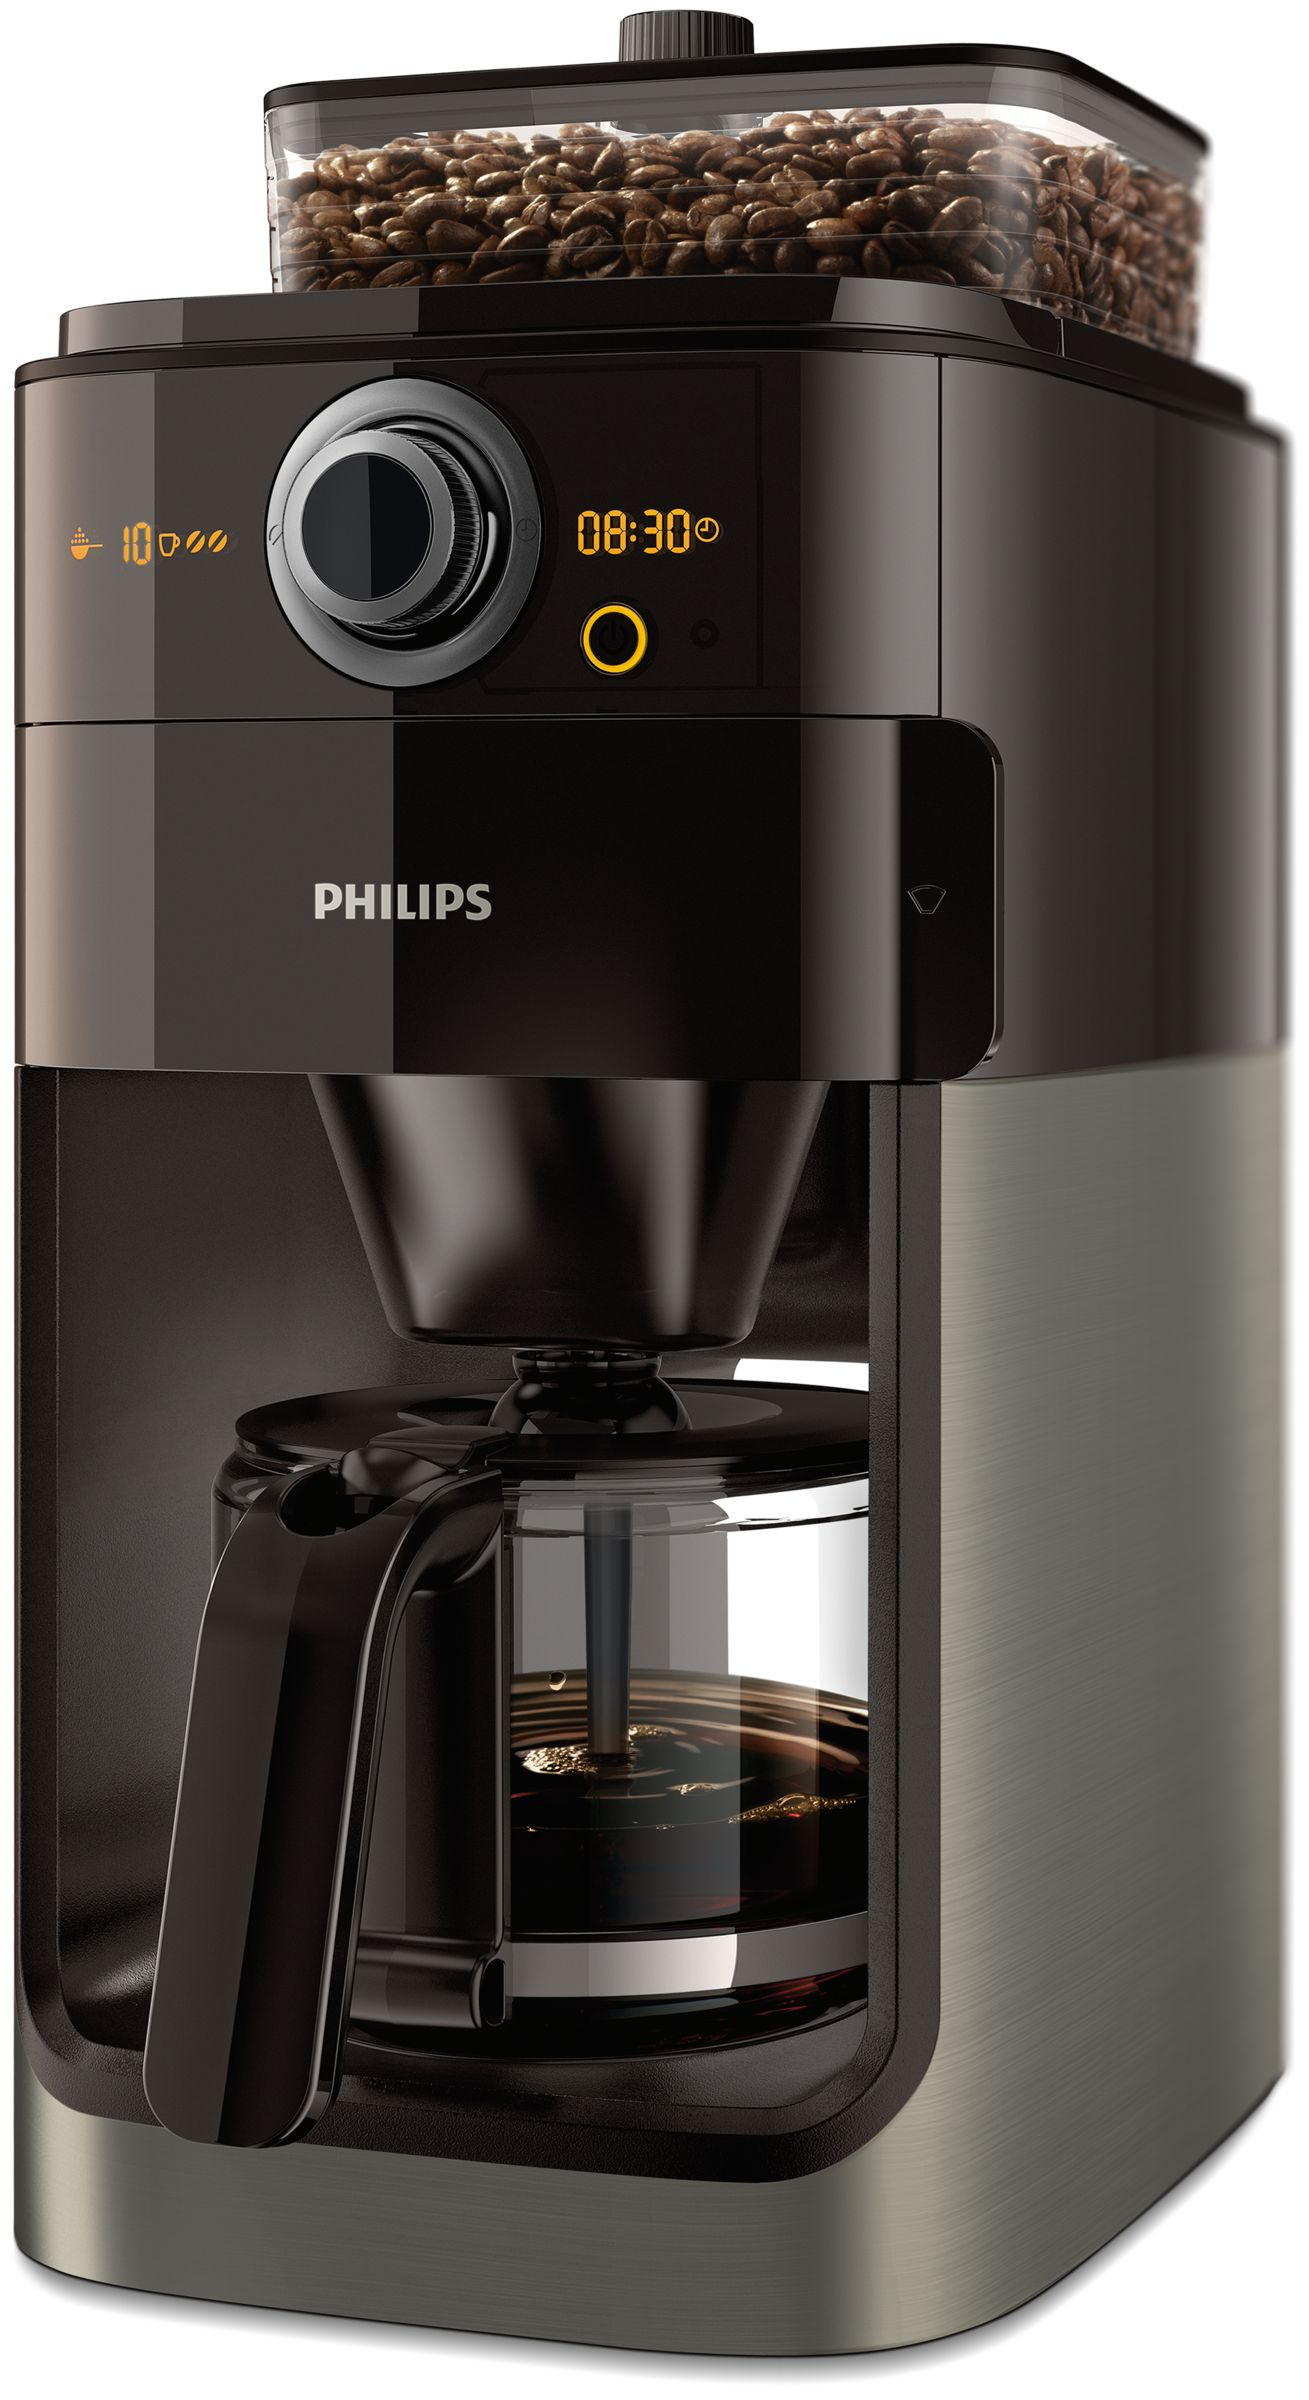 Philips Grind & Brew HD7768/80 coffee maker